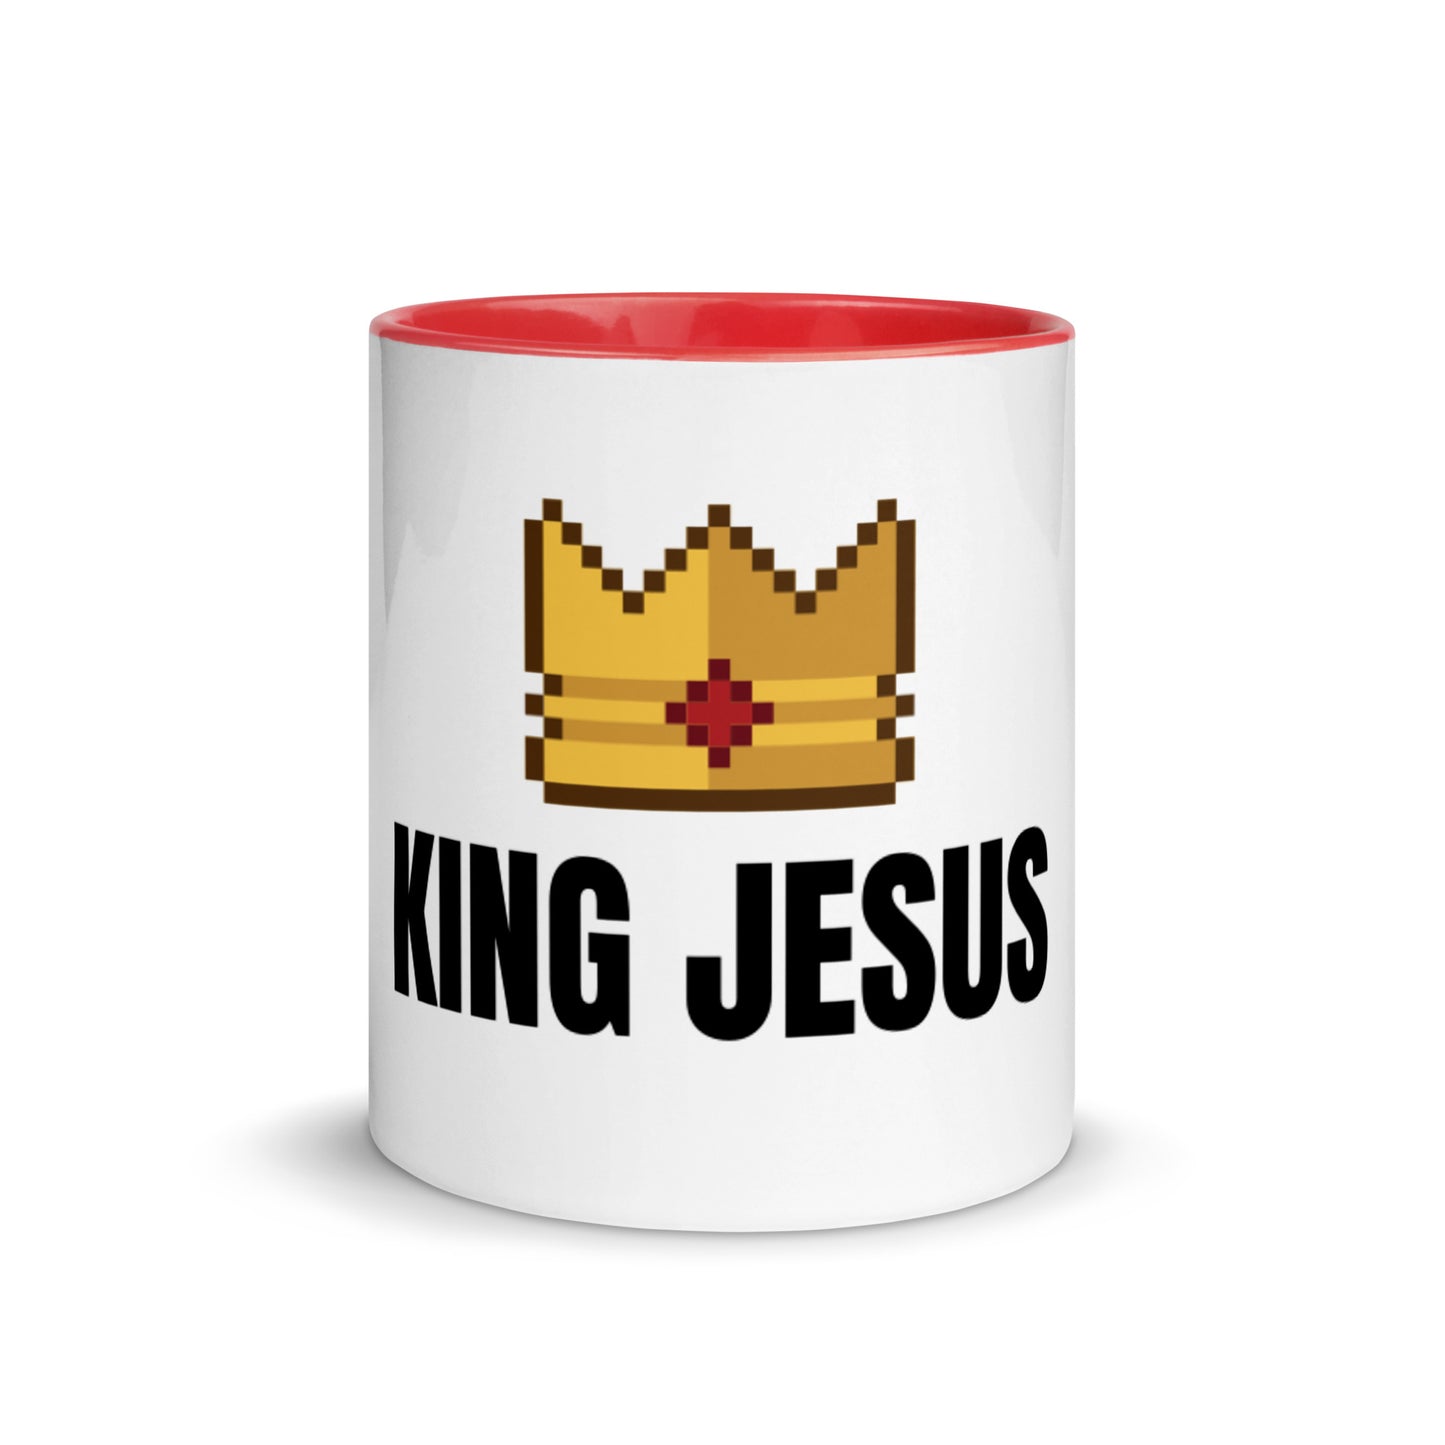 King Jesus White Ceramic Mug with Color Inside